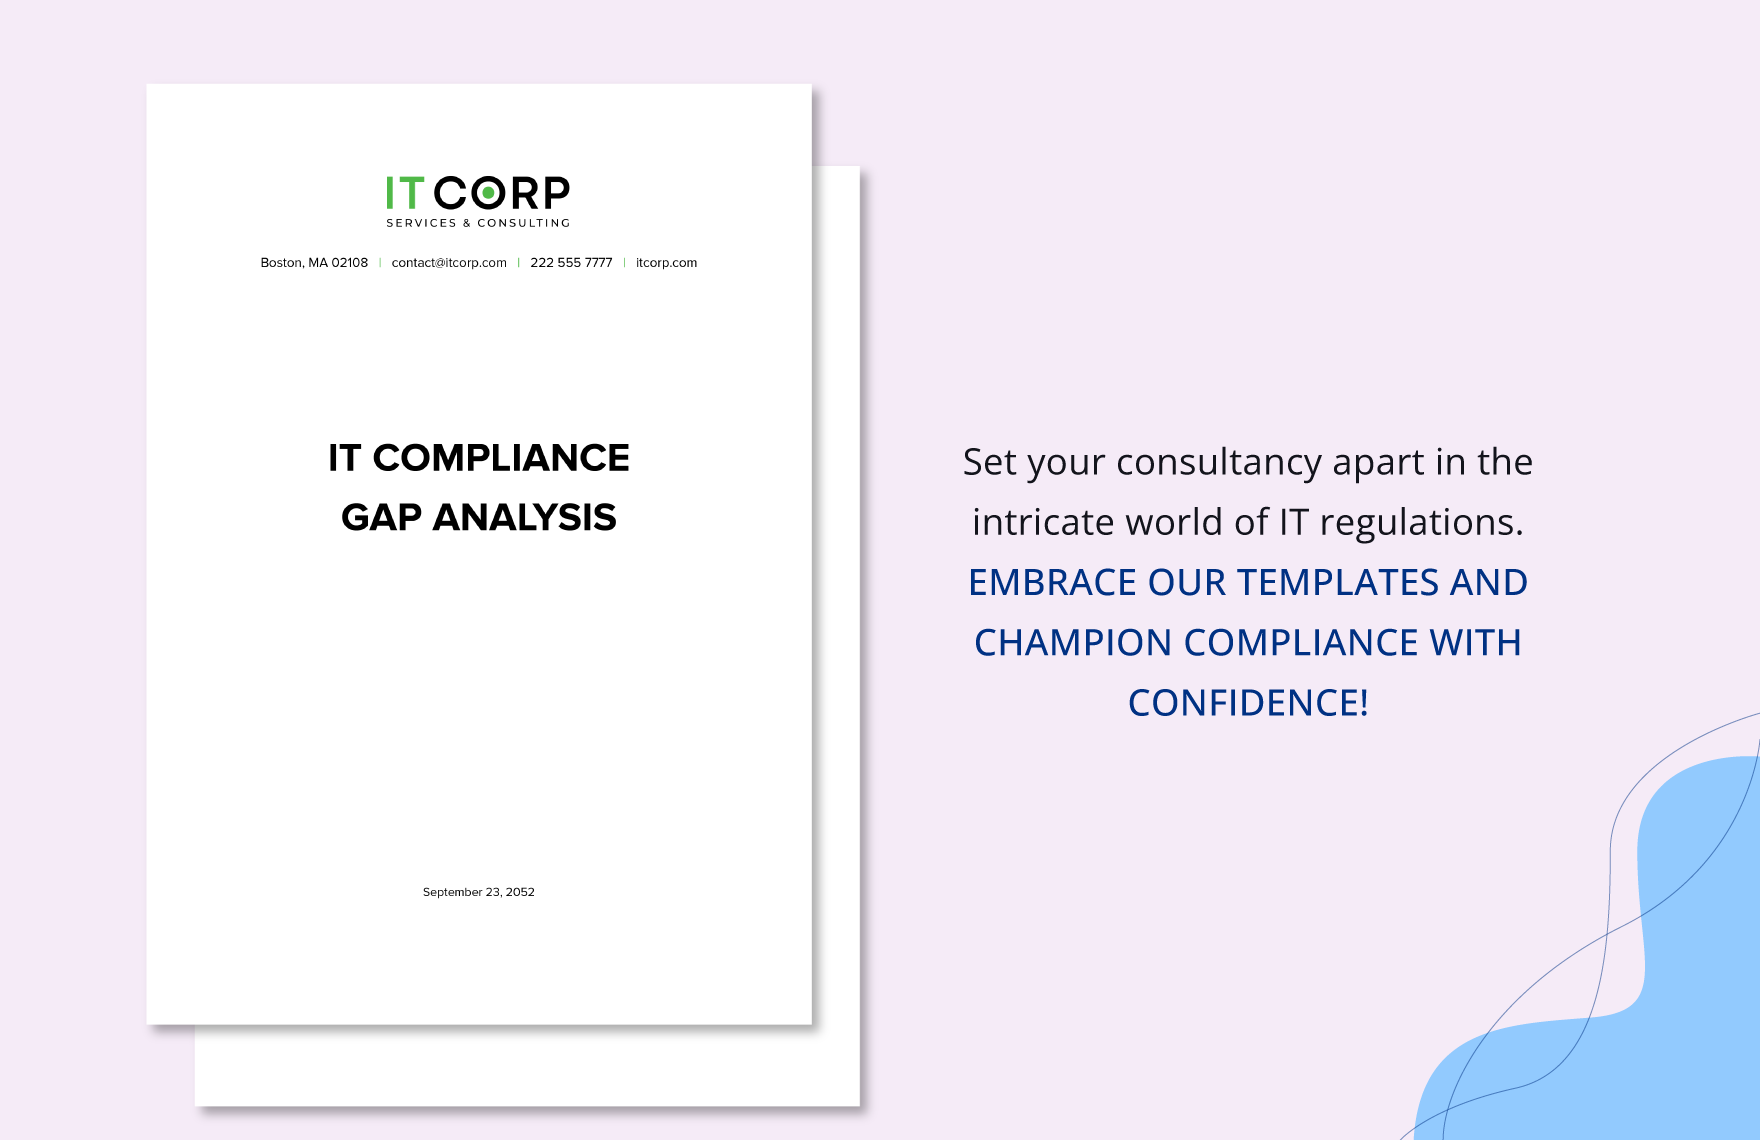 IT Compliance Gap Analysis Template